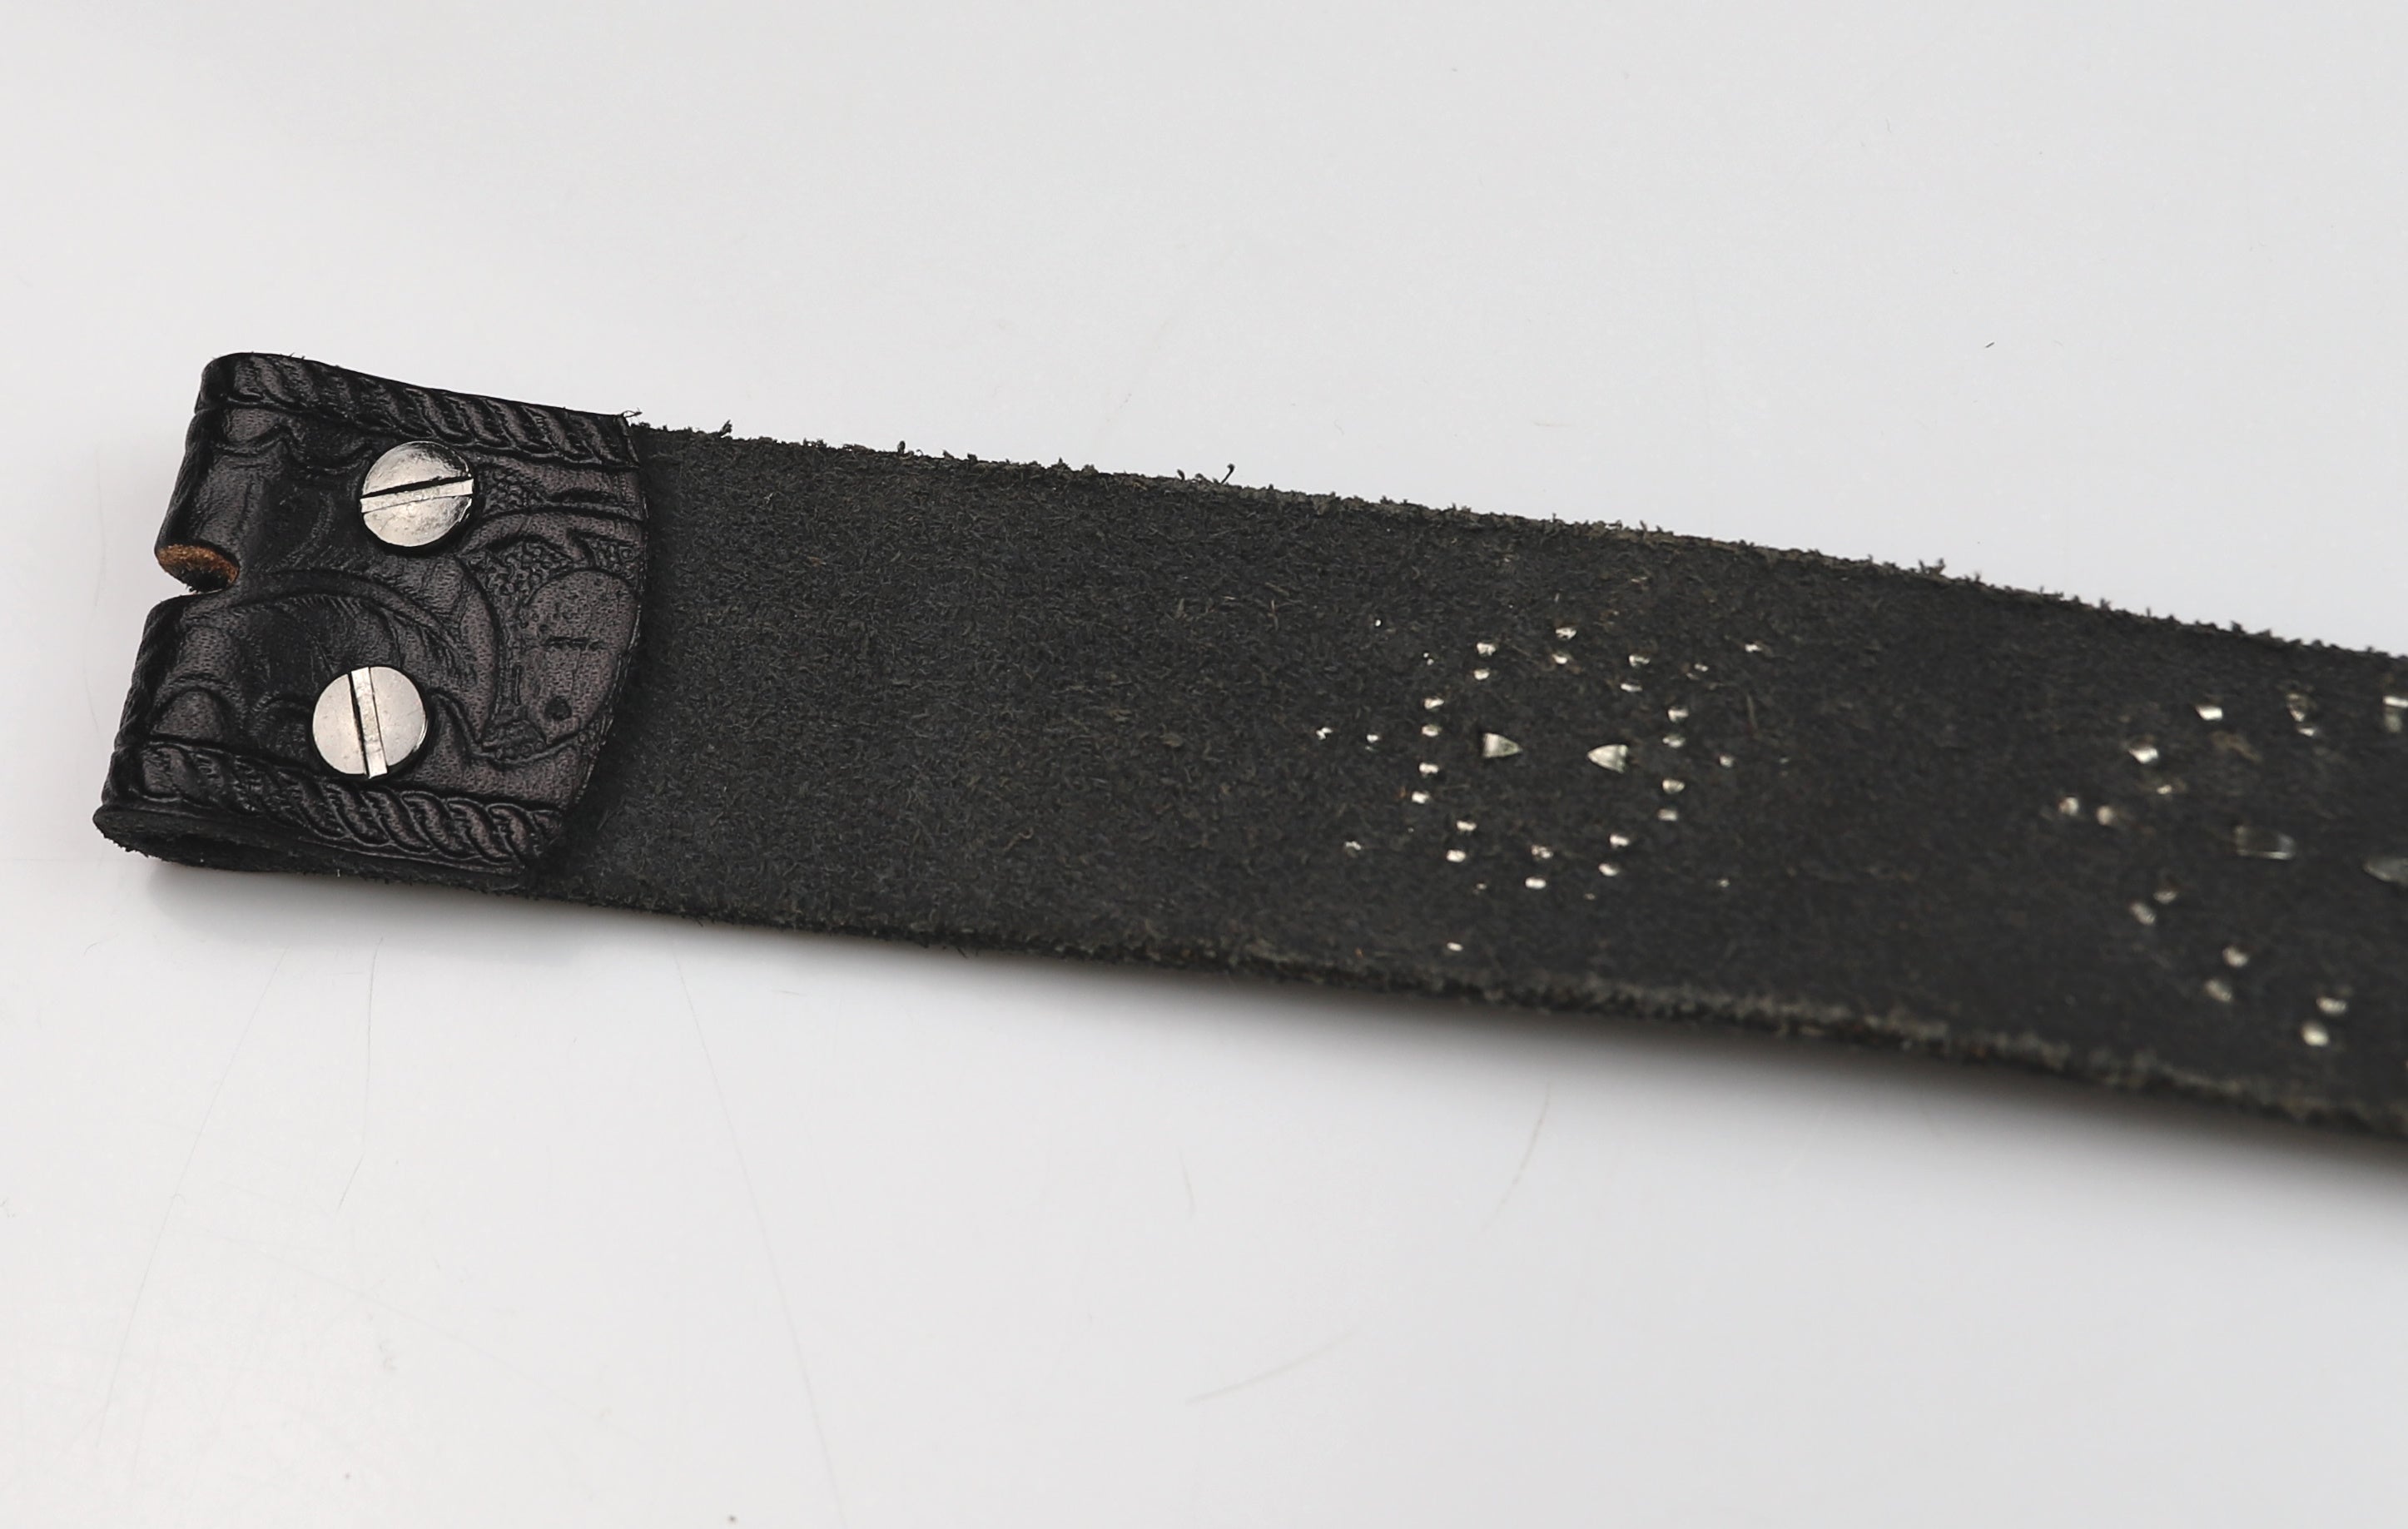 Bulbous Belt, Jeweled and Studded, size 30, Black